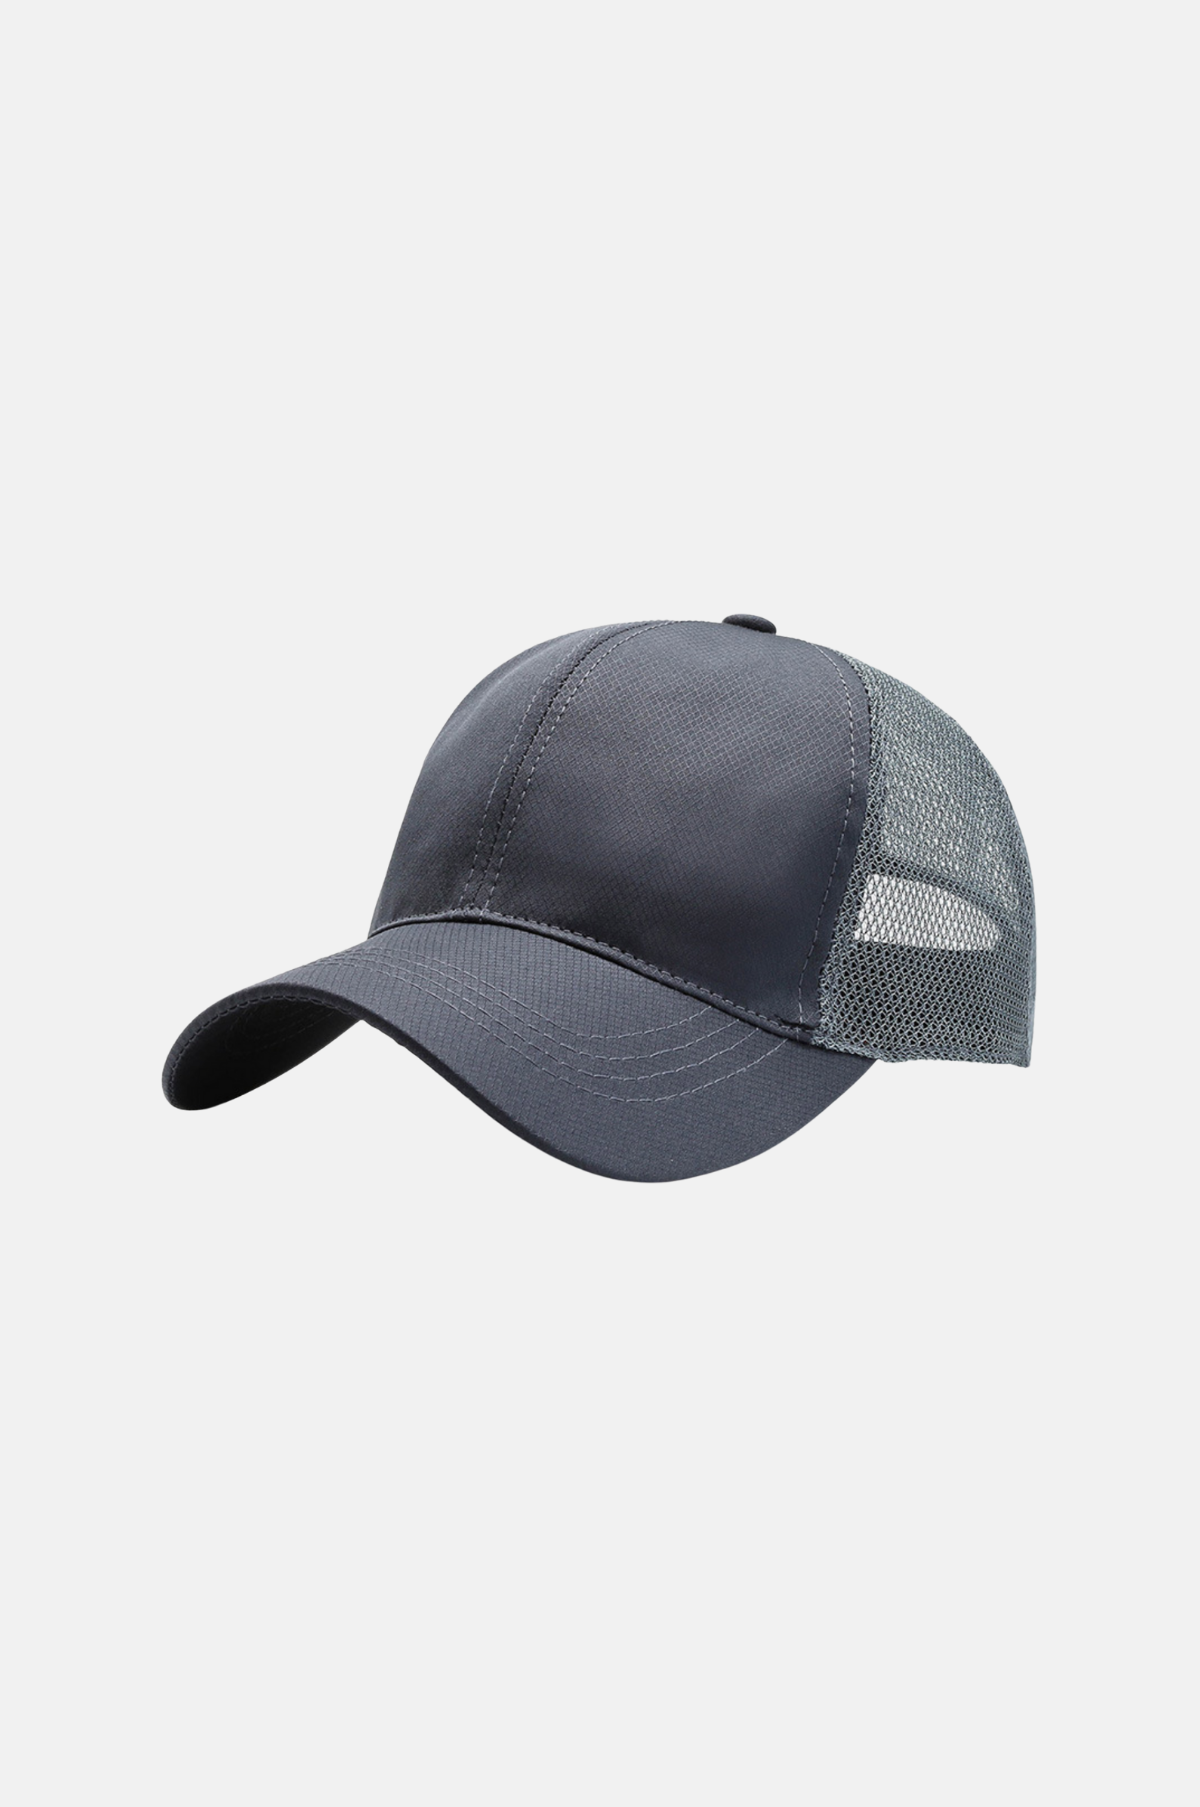 Perfomance lightweight baseball cap, grey